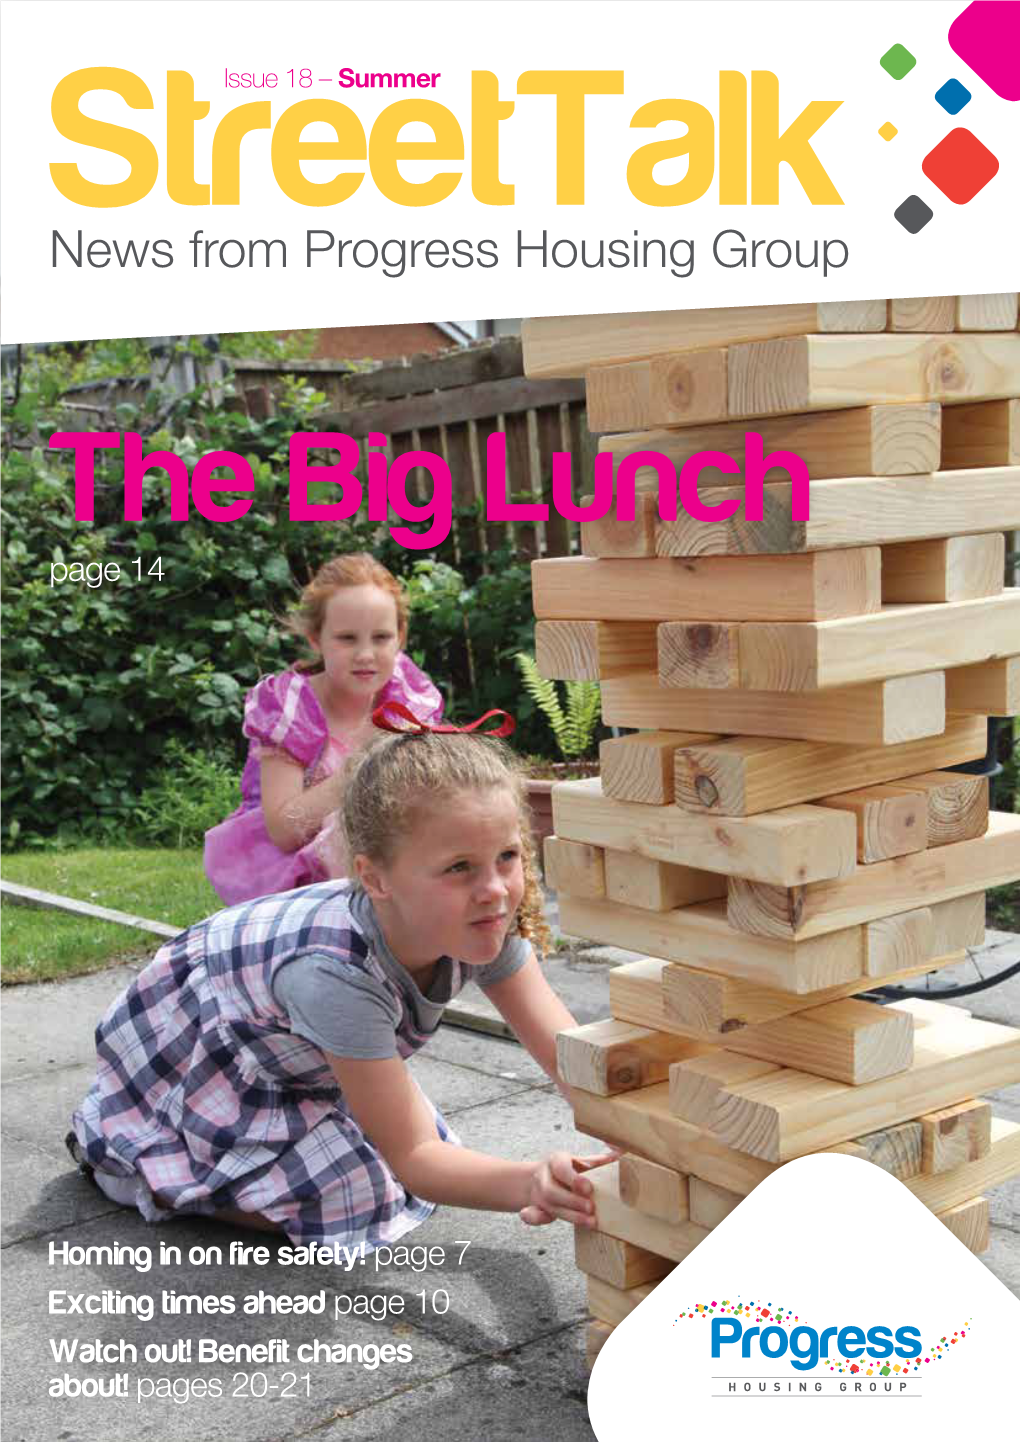 News from Progress Housing Group